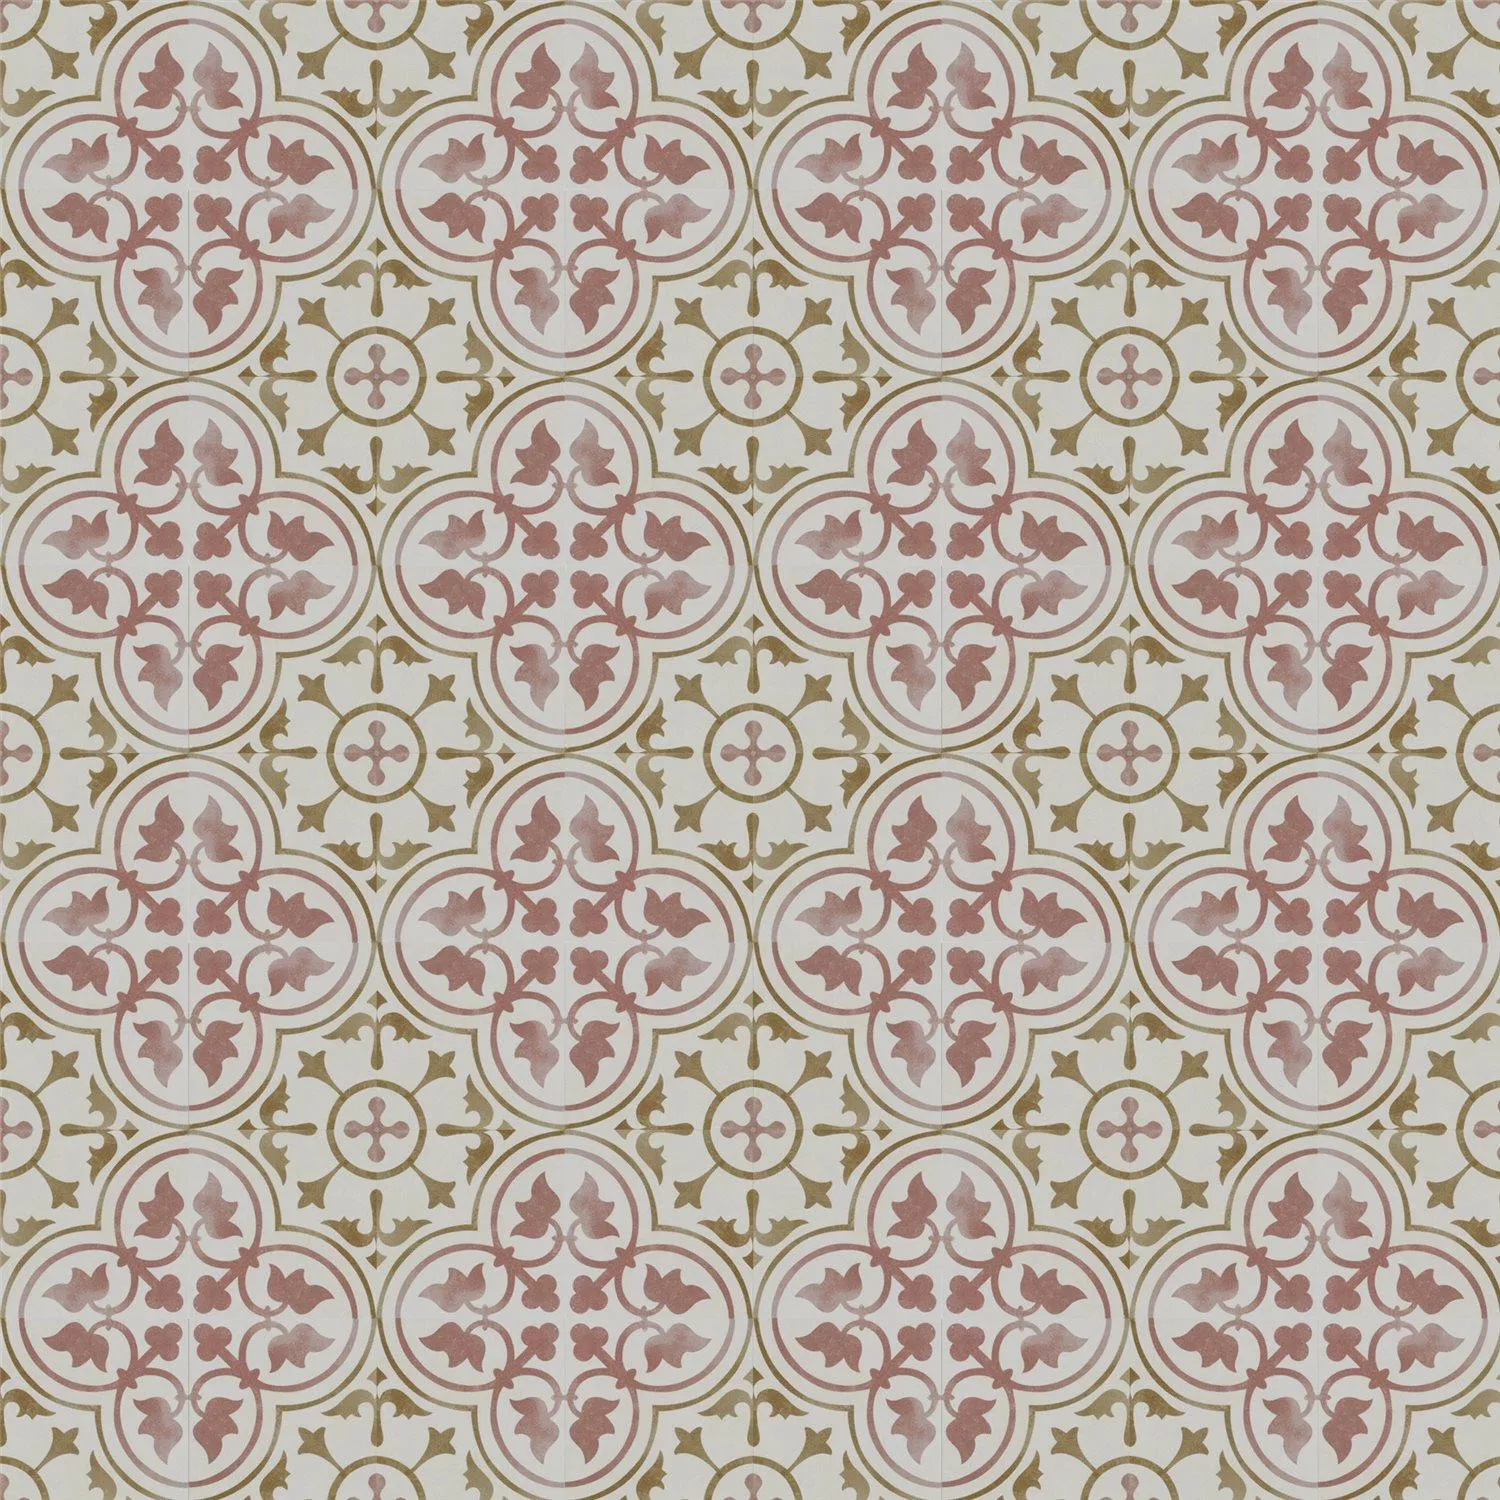 Sample Cement Tiles Optic Gotik Donatello 22,3x22,3cm